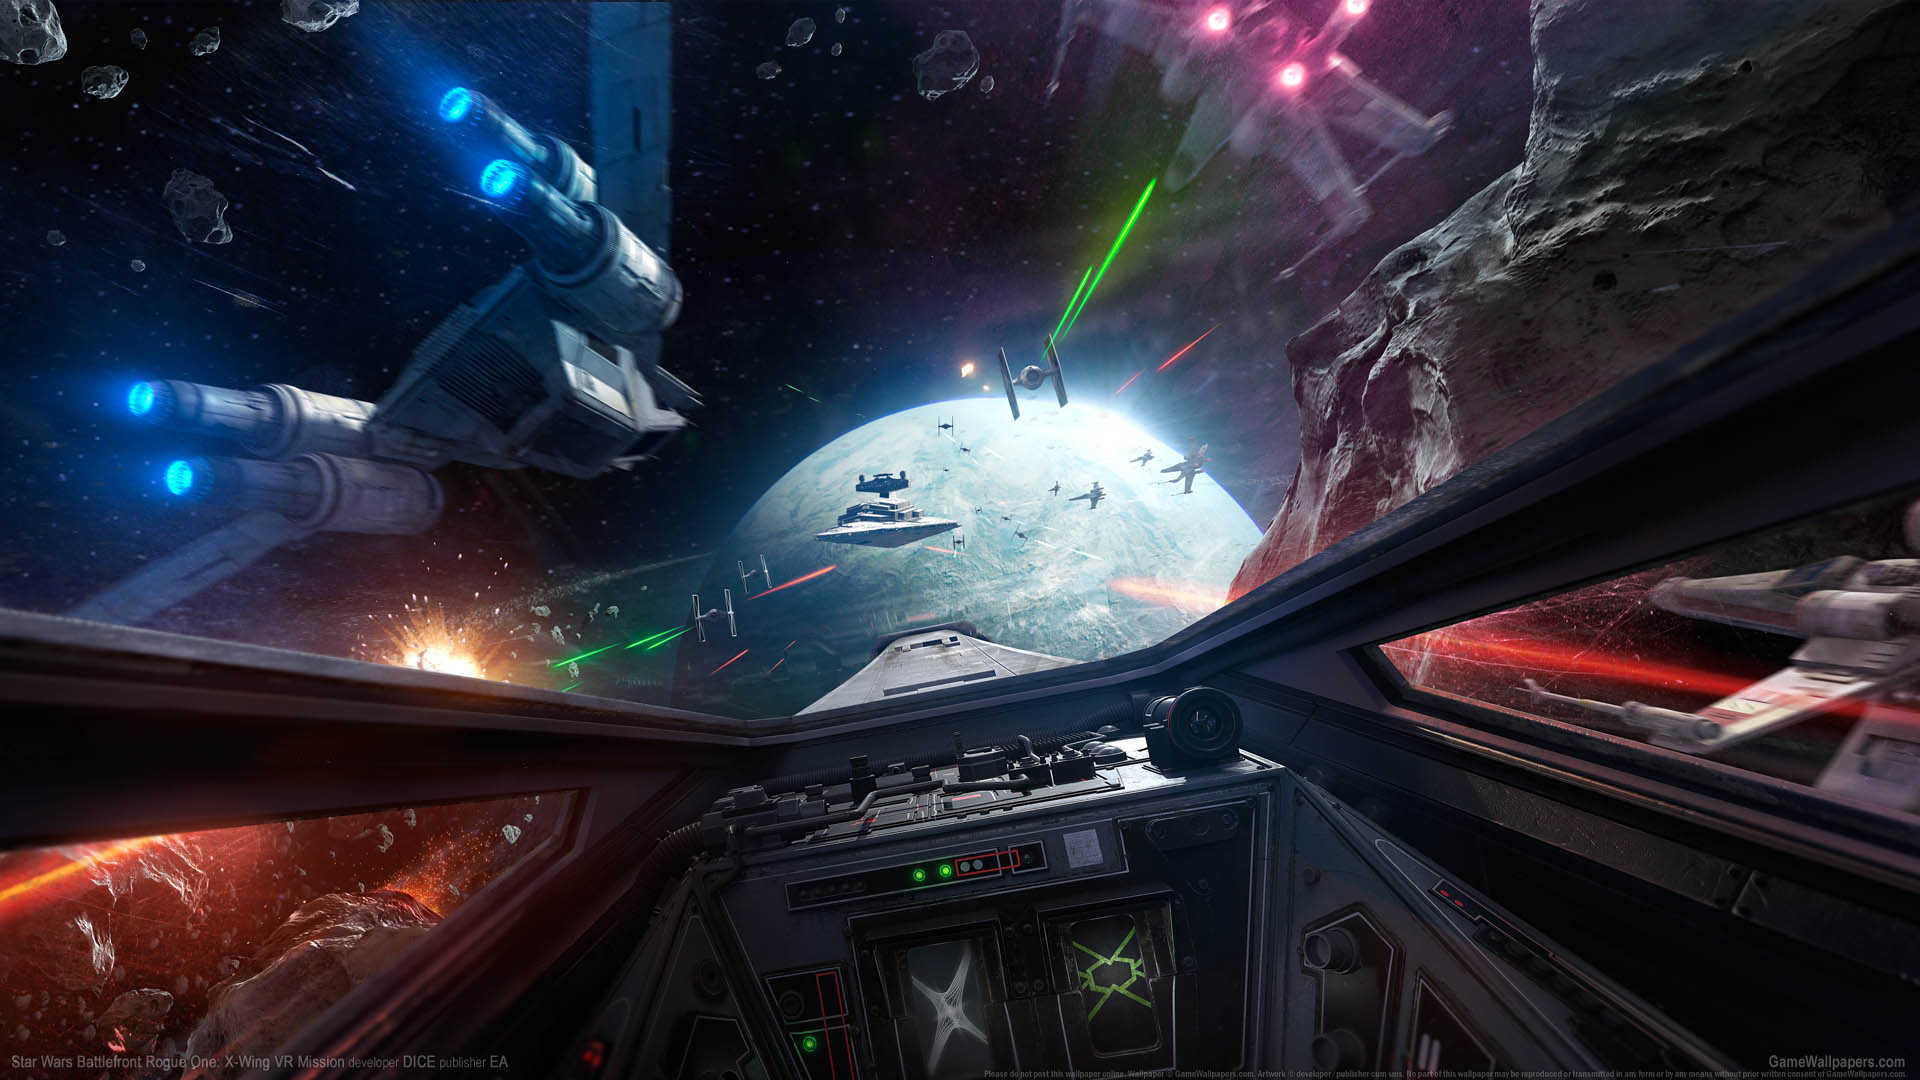 Star Wars Battlefront Rogue One: X-Wing VR Mission fondo de escritorio 01 1920x1080